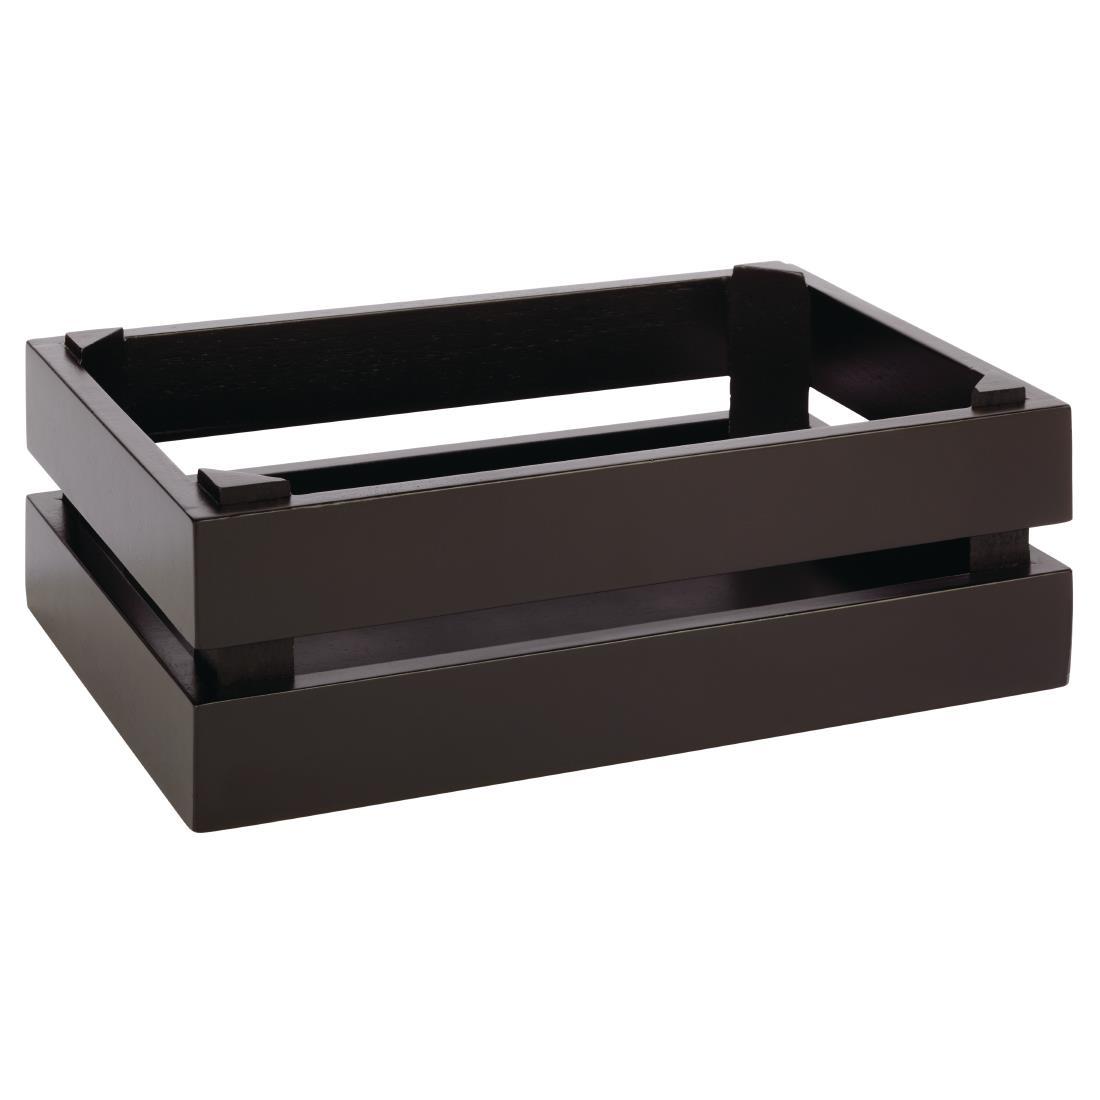 APS Superbox Buffet Crate Black GN1/4 - DR738  - 1